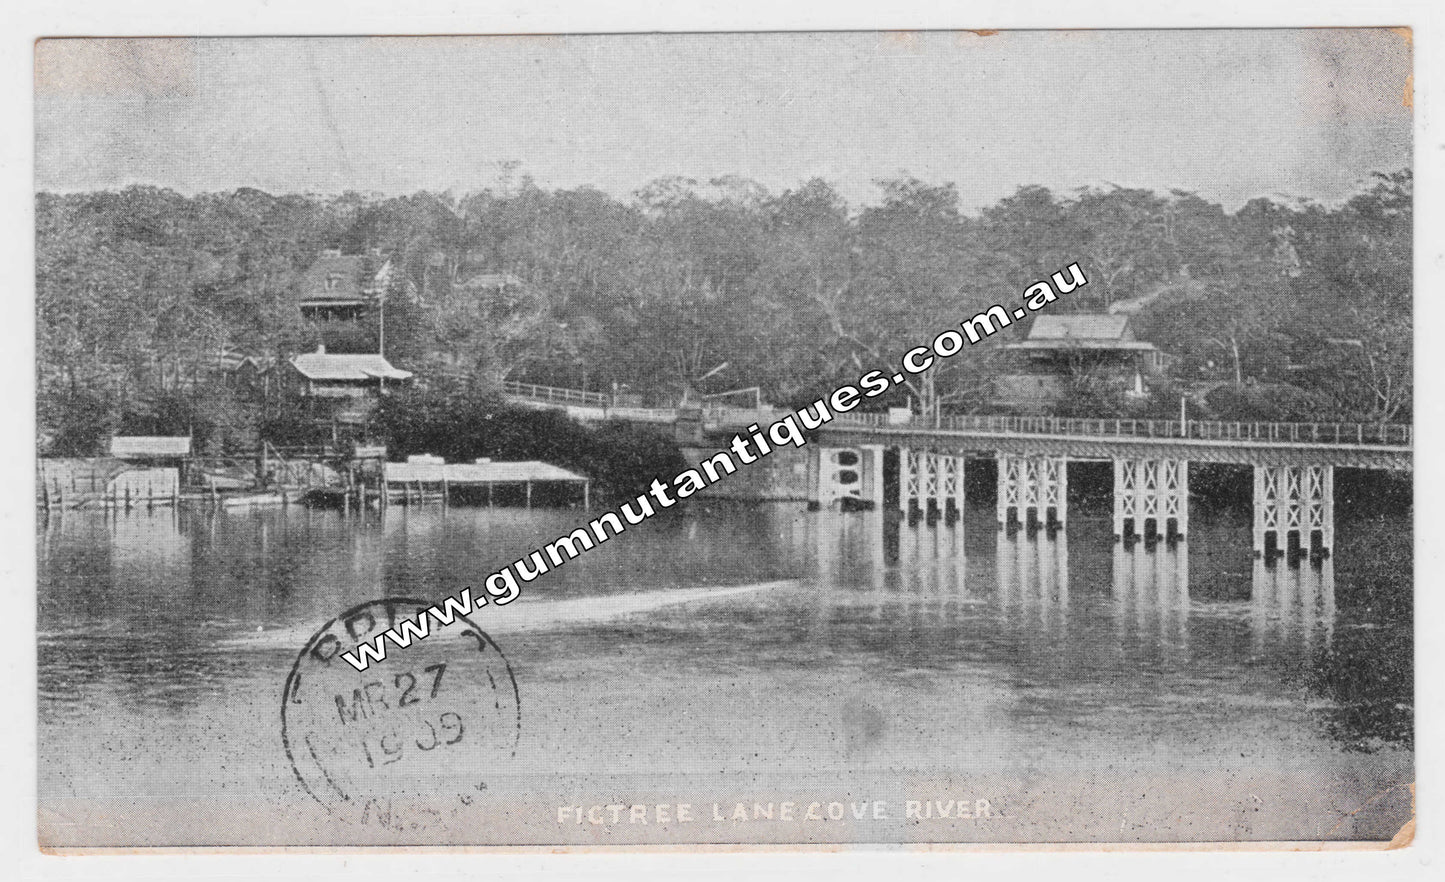 Postcard Figtree Lane Cove River 1909